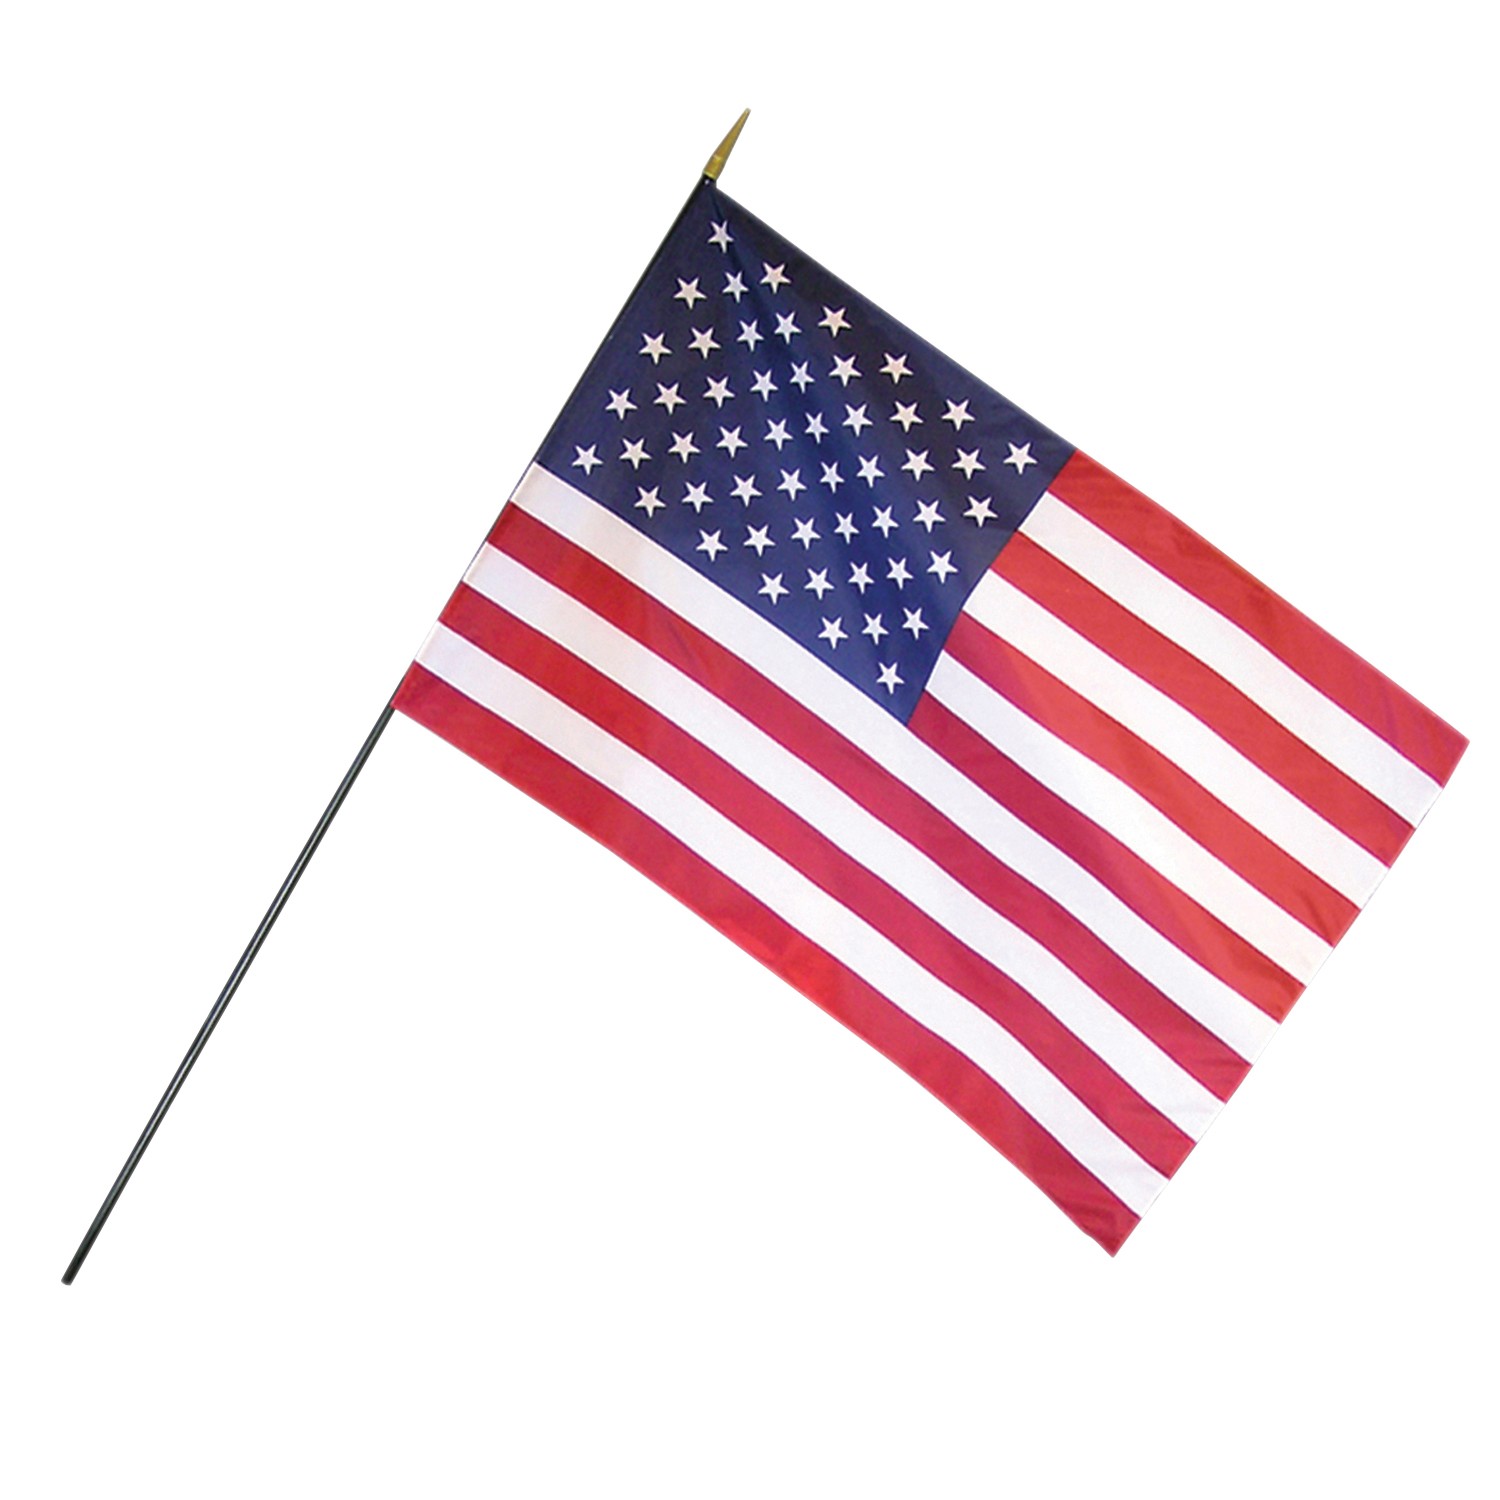 Empire Brand U.S. Classroom Flag with Staff, 36" x 24"